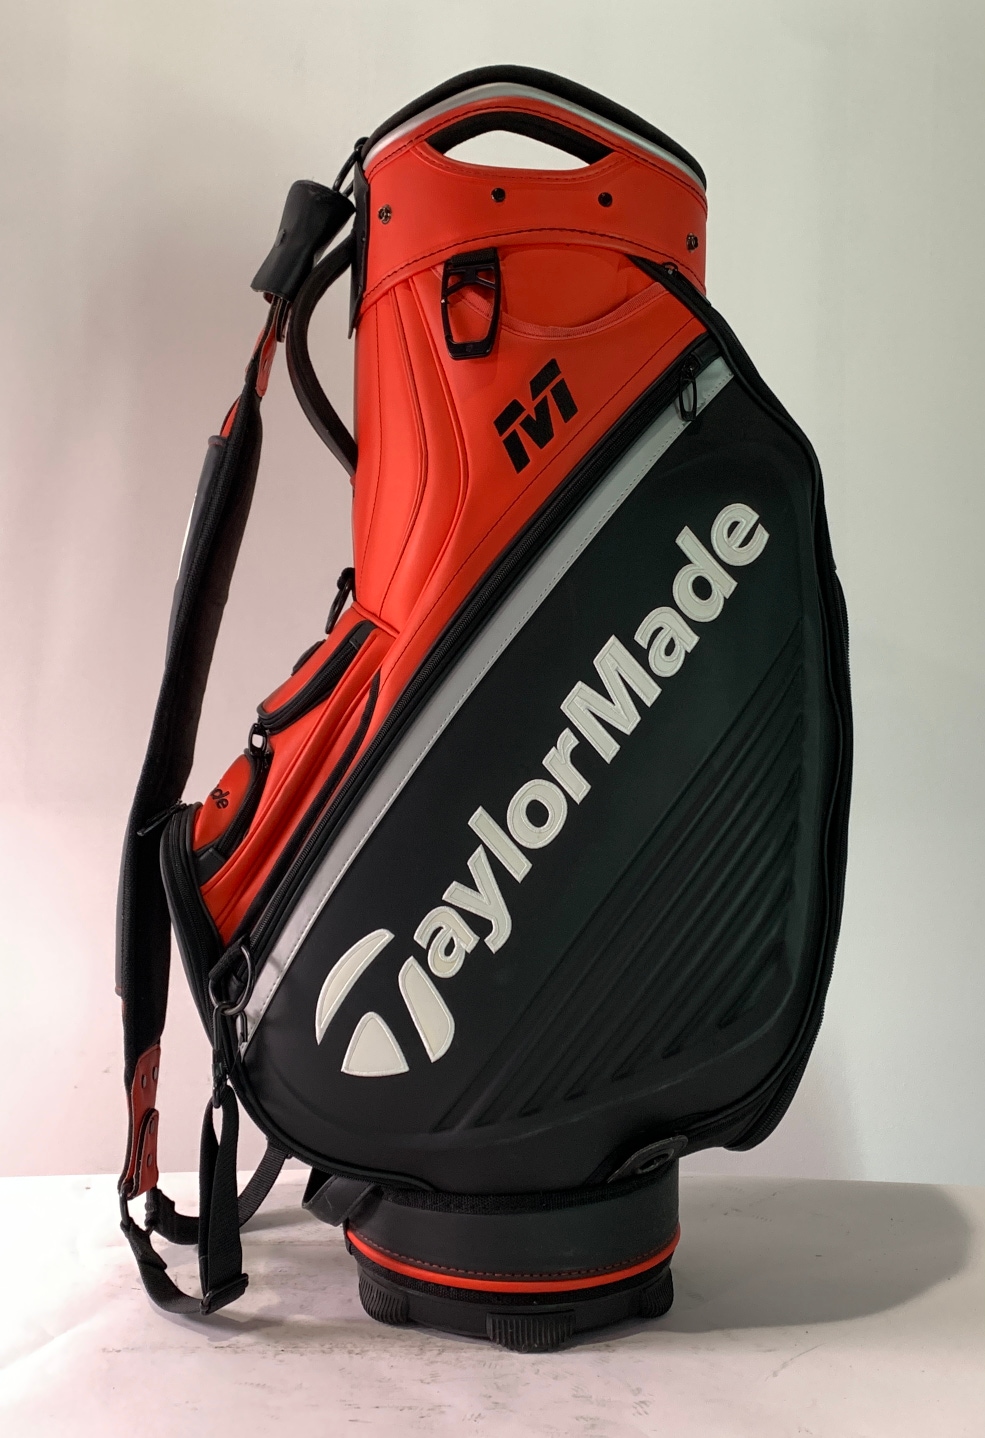 TaylorMade Tour M Staff Golf Bag Red Black Single Strap 6-Way Divide 8" x 9"